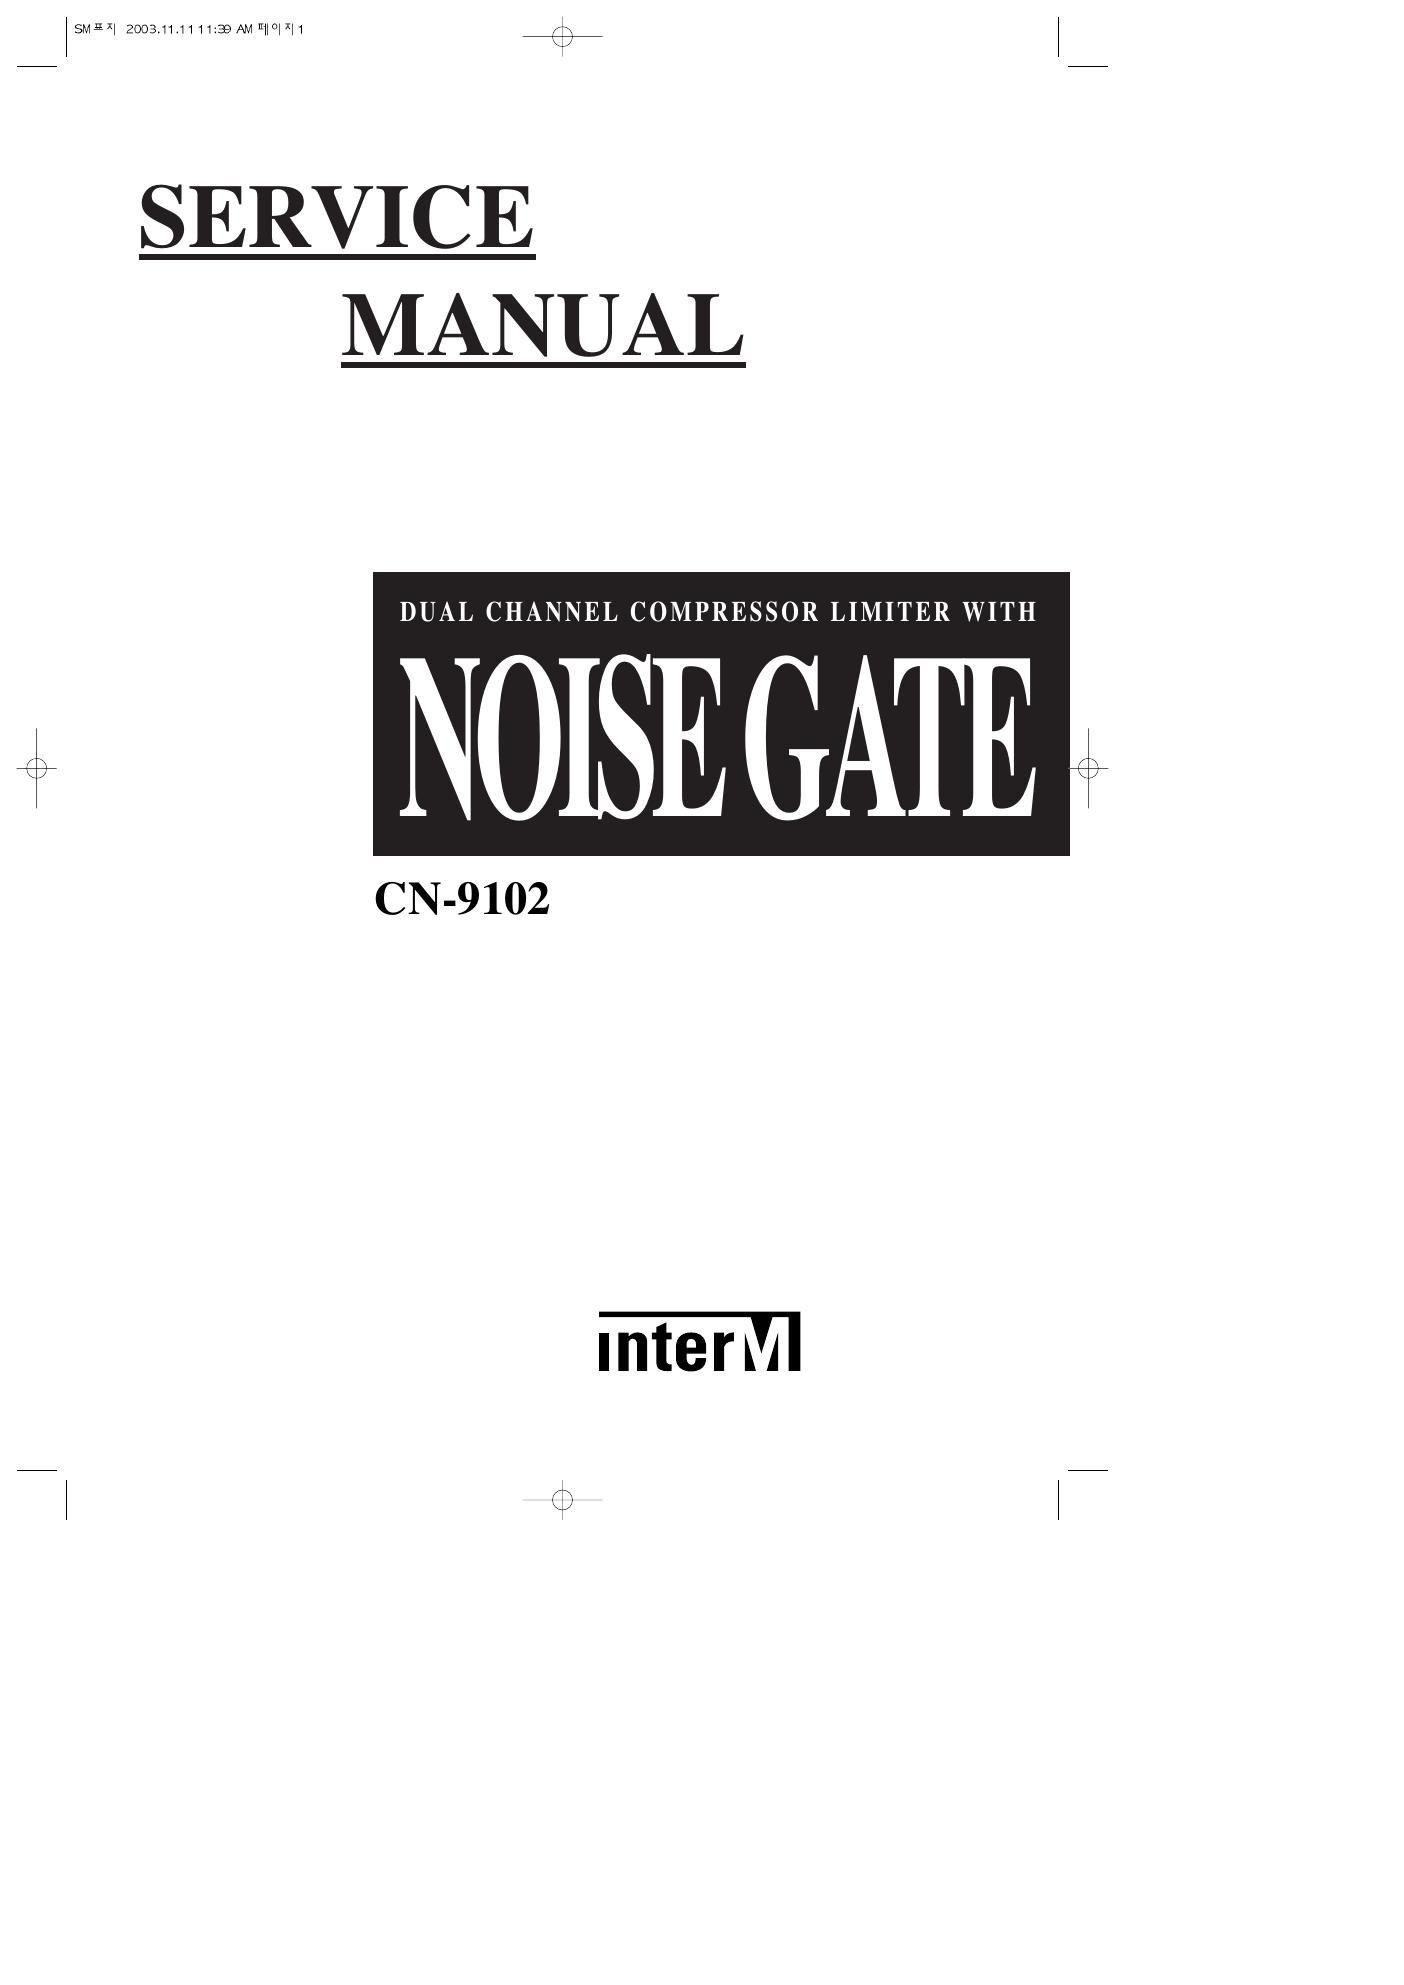 interm cn 9102 noise gate